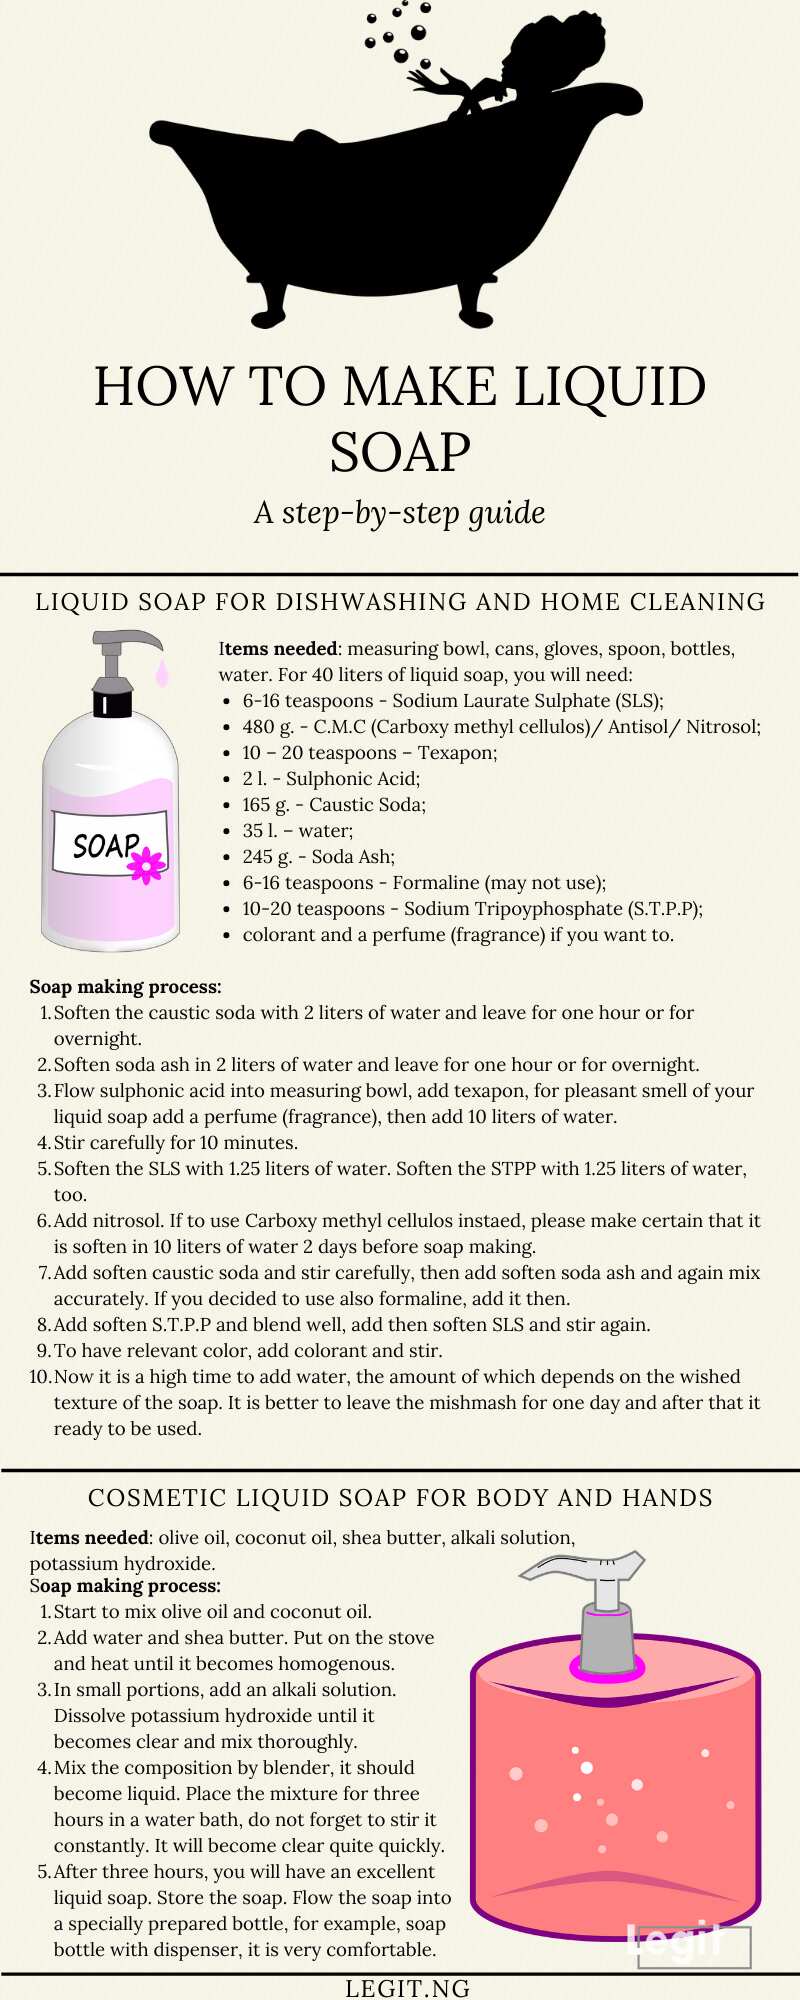 essay on how to make liquid soap